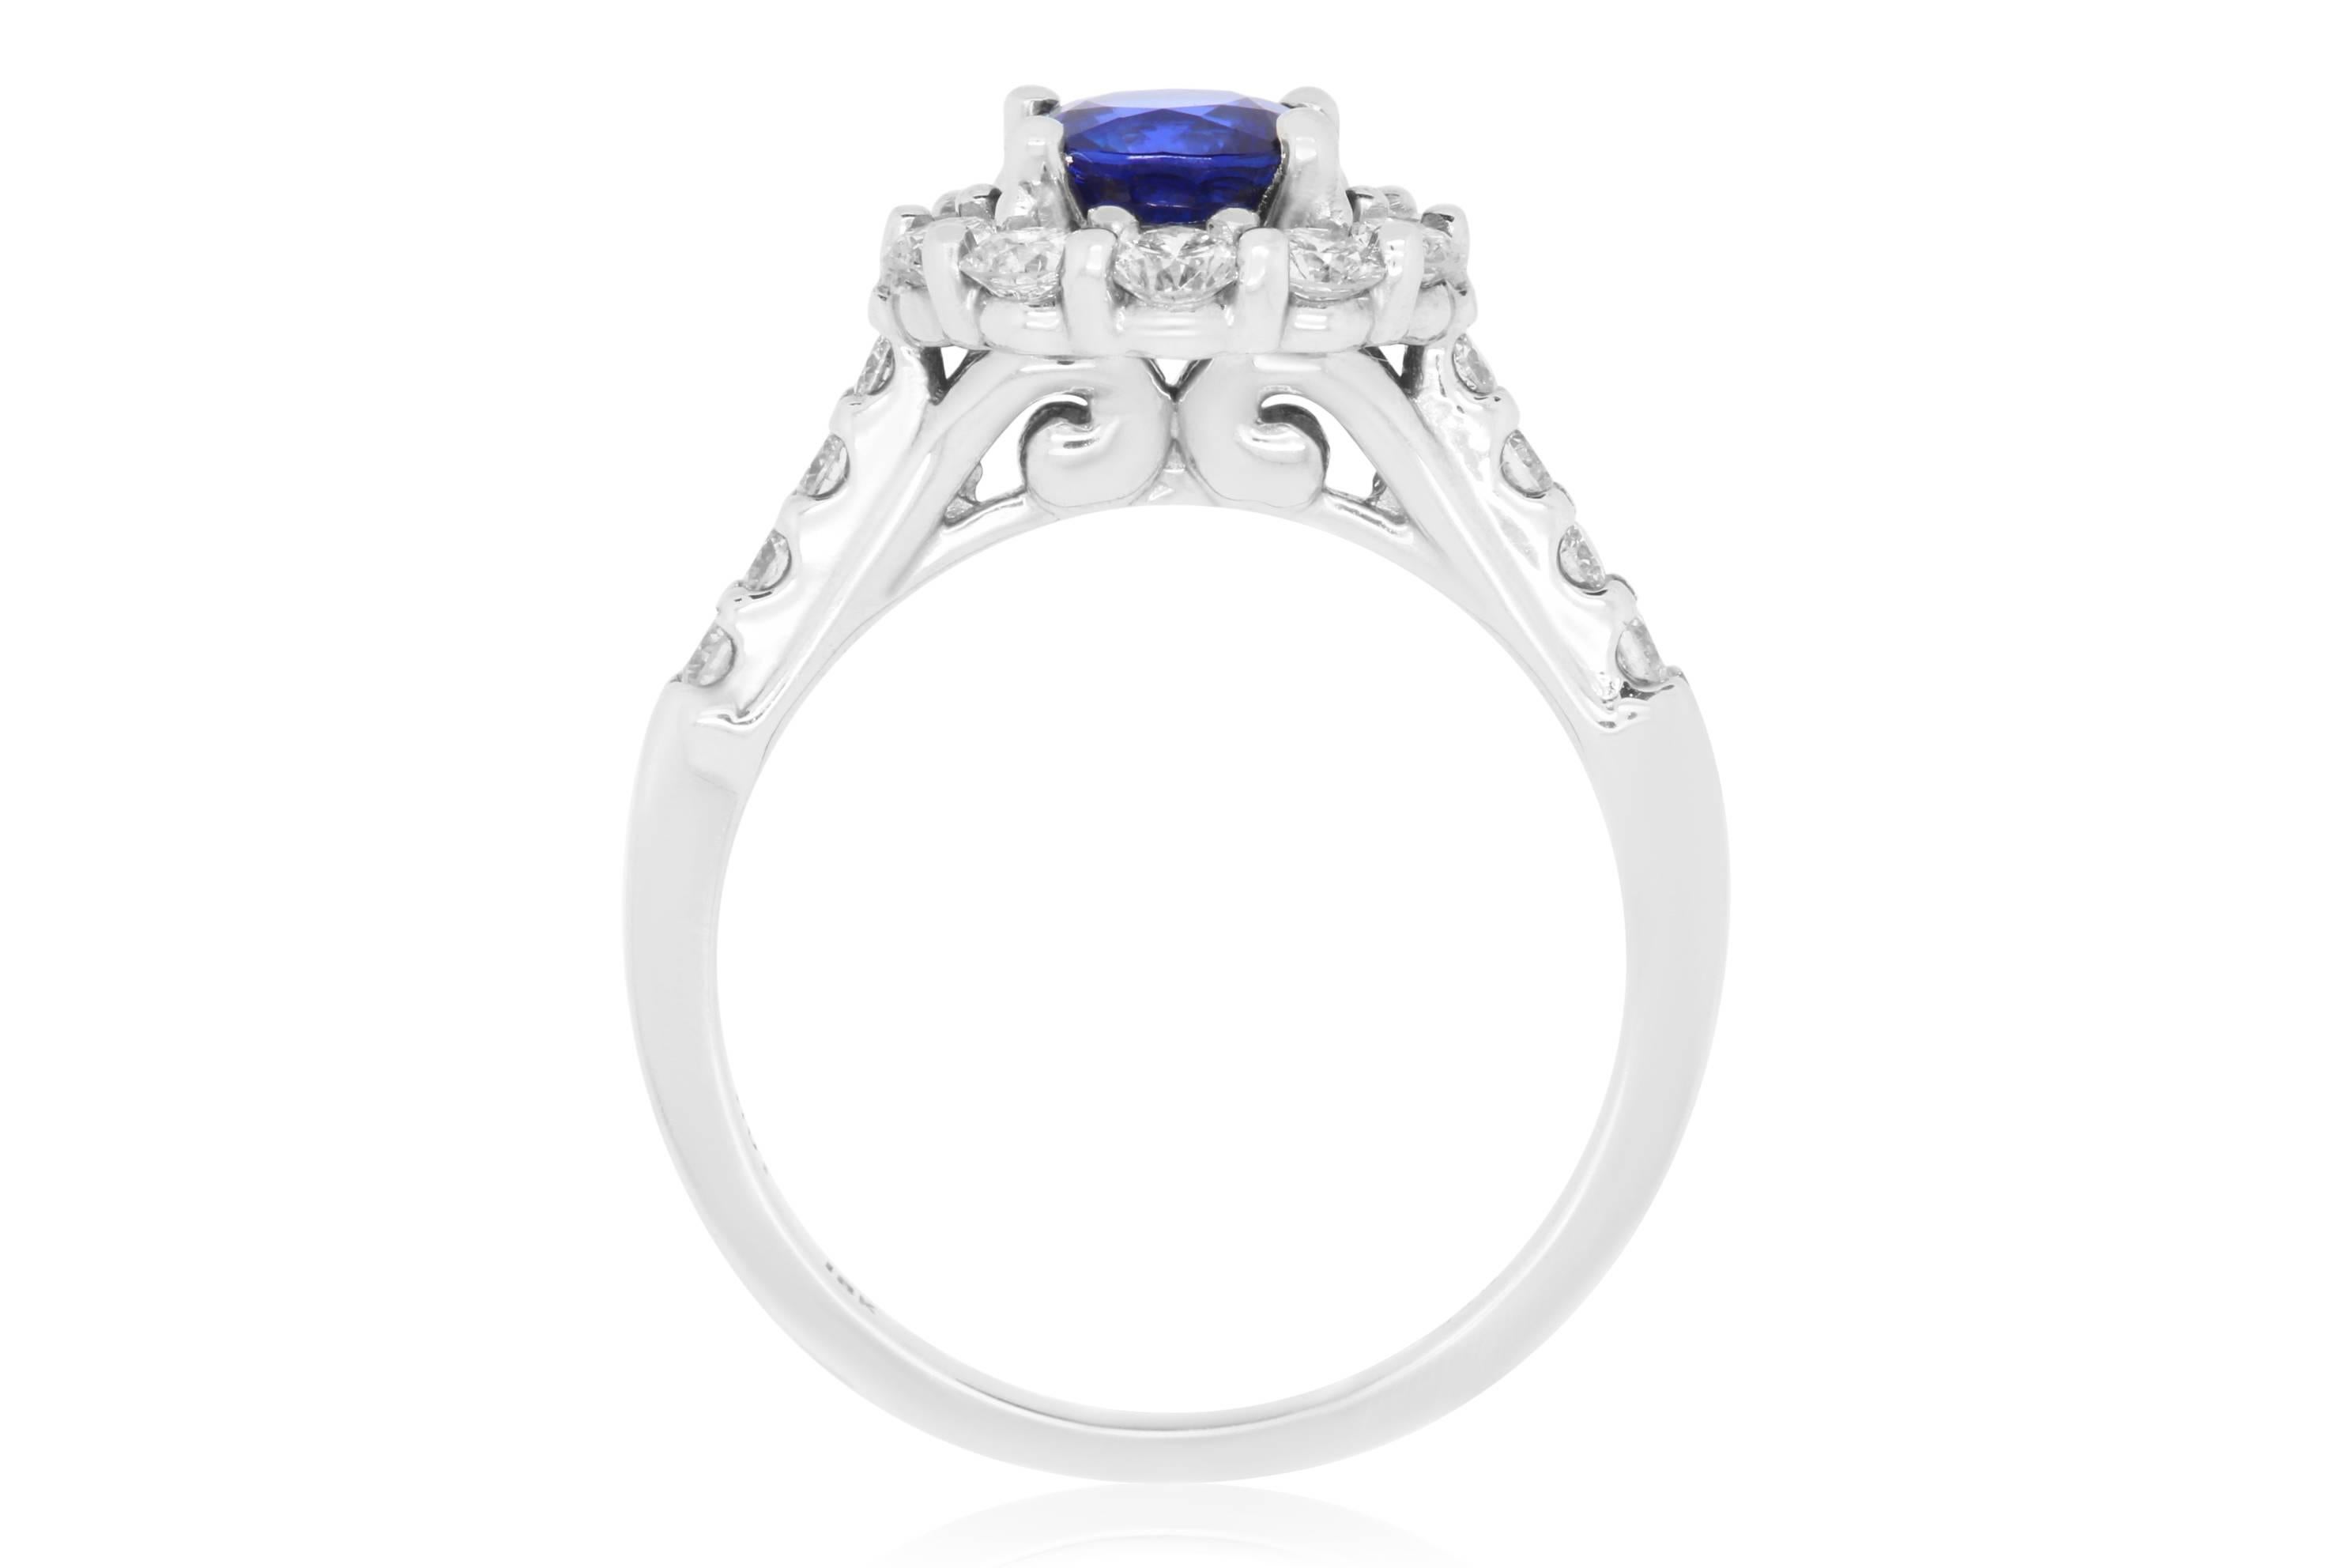 Contemporary 1.08 Carat Blue Sapphire and 0.85 Carat White Diamond Ring